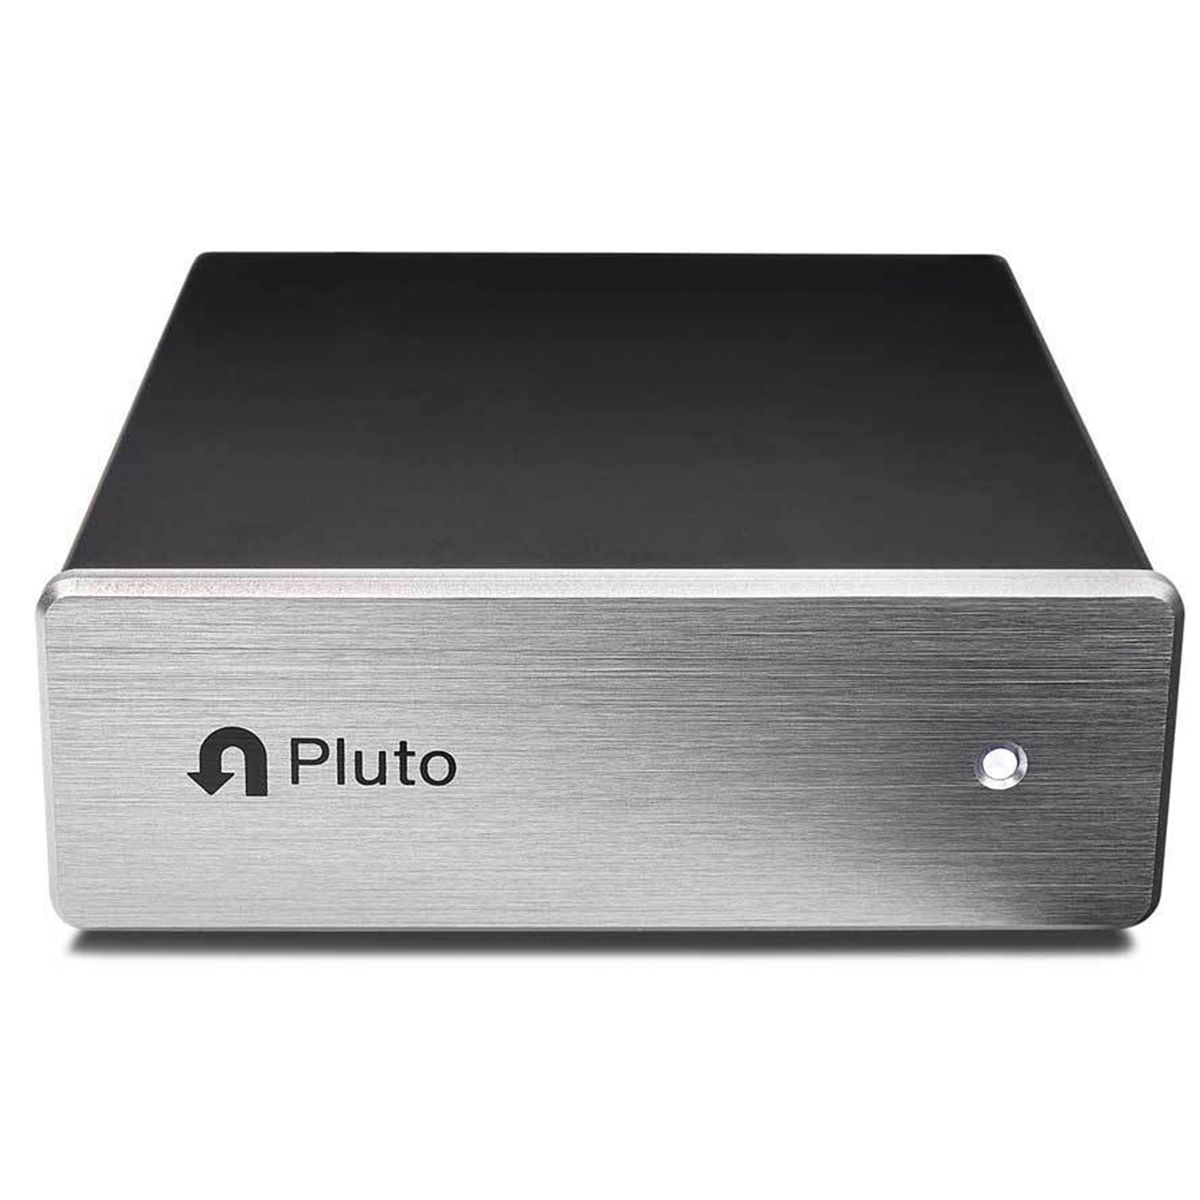 U-Turn Audio Pluto 2 Phono Preamp